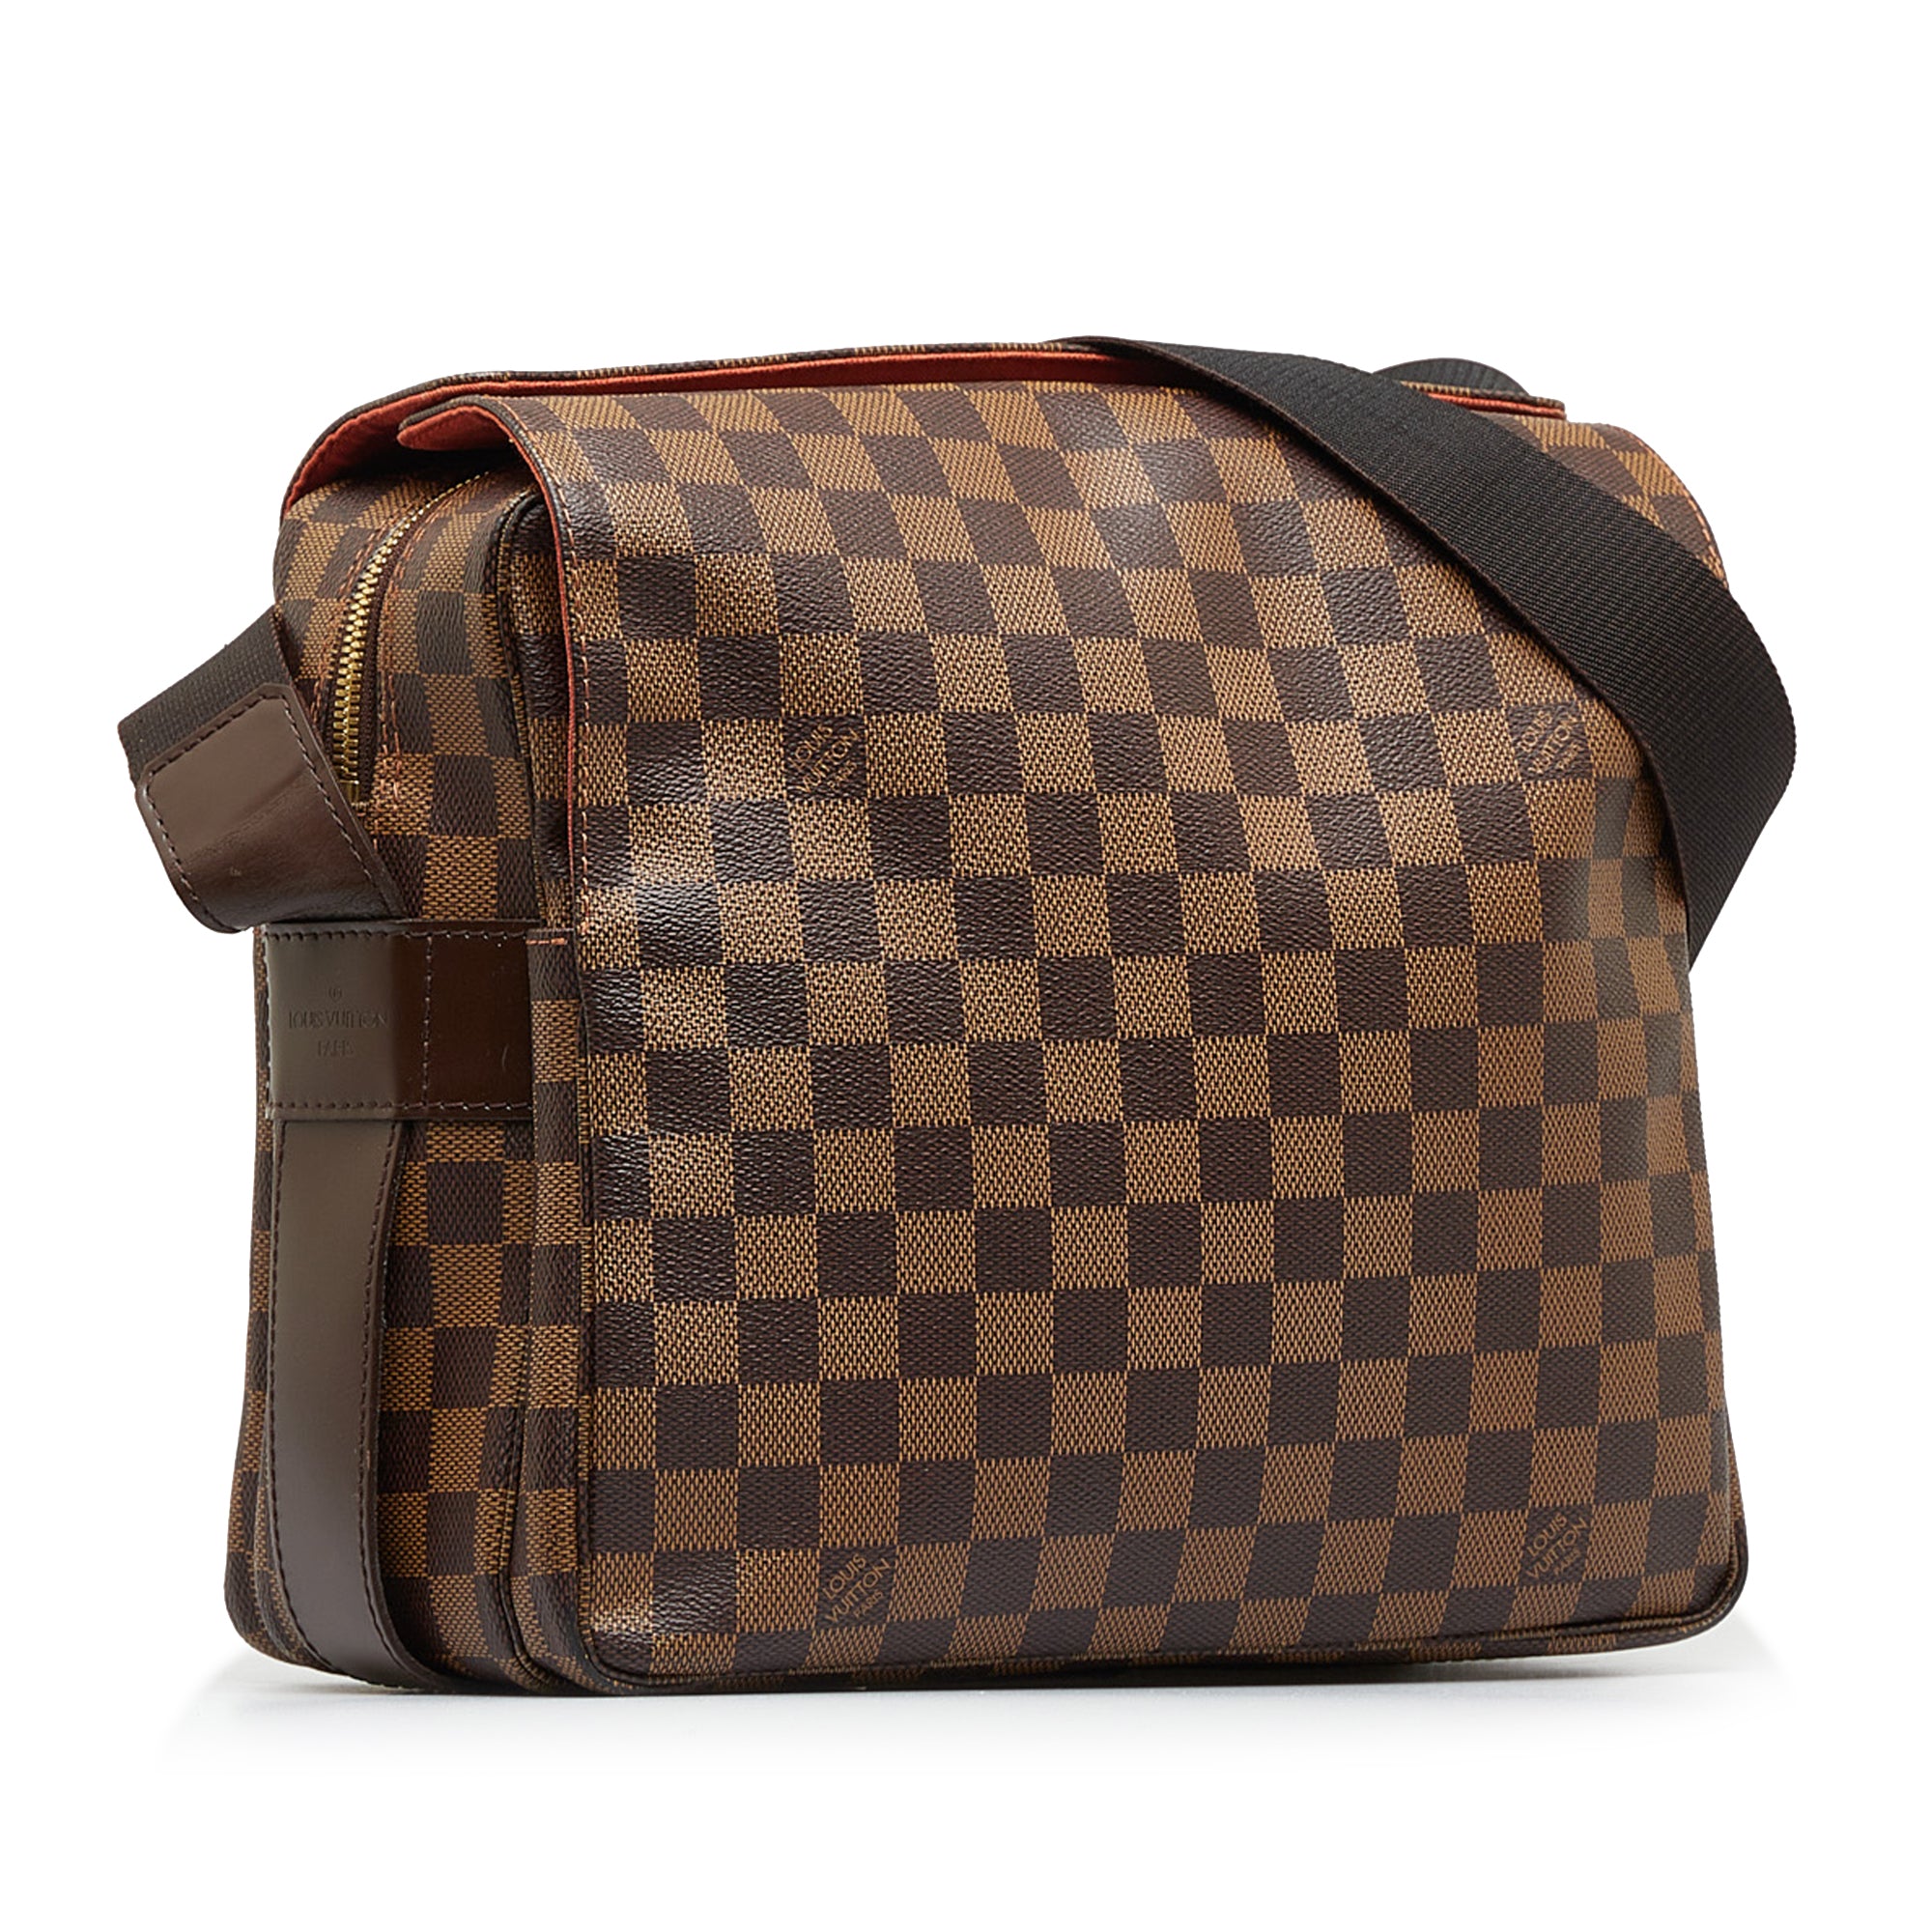 Louis Vuitton Brera Handbag in Damier Canvas - Handbags & Purses - Costume  & Dressing Accessories